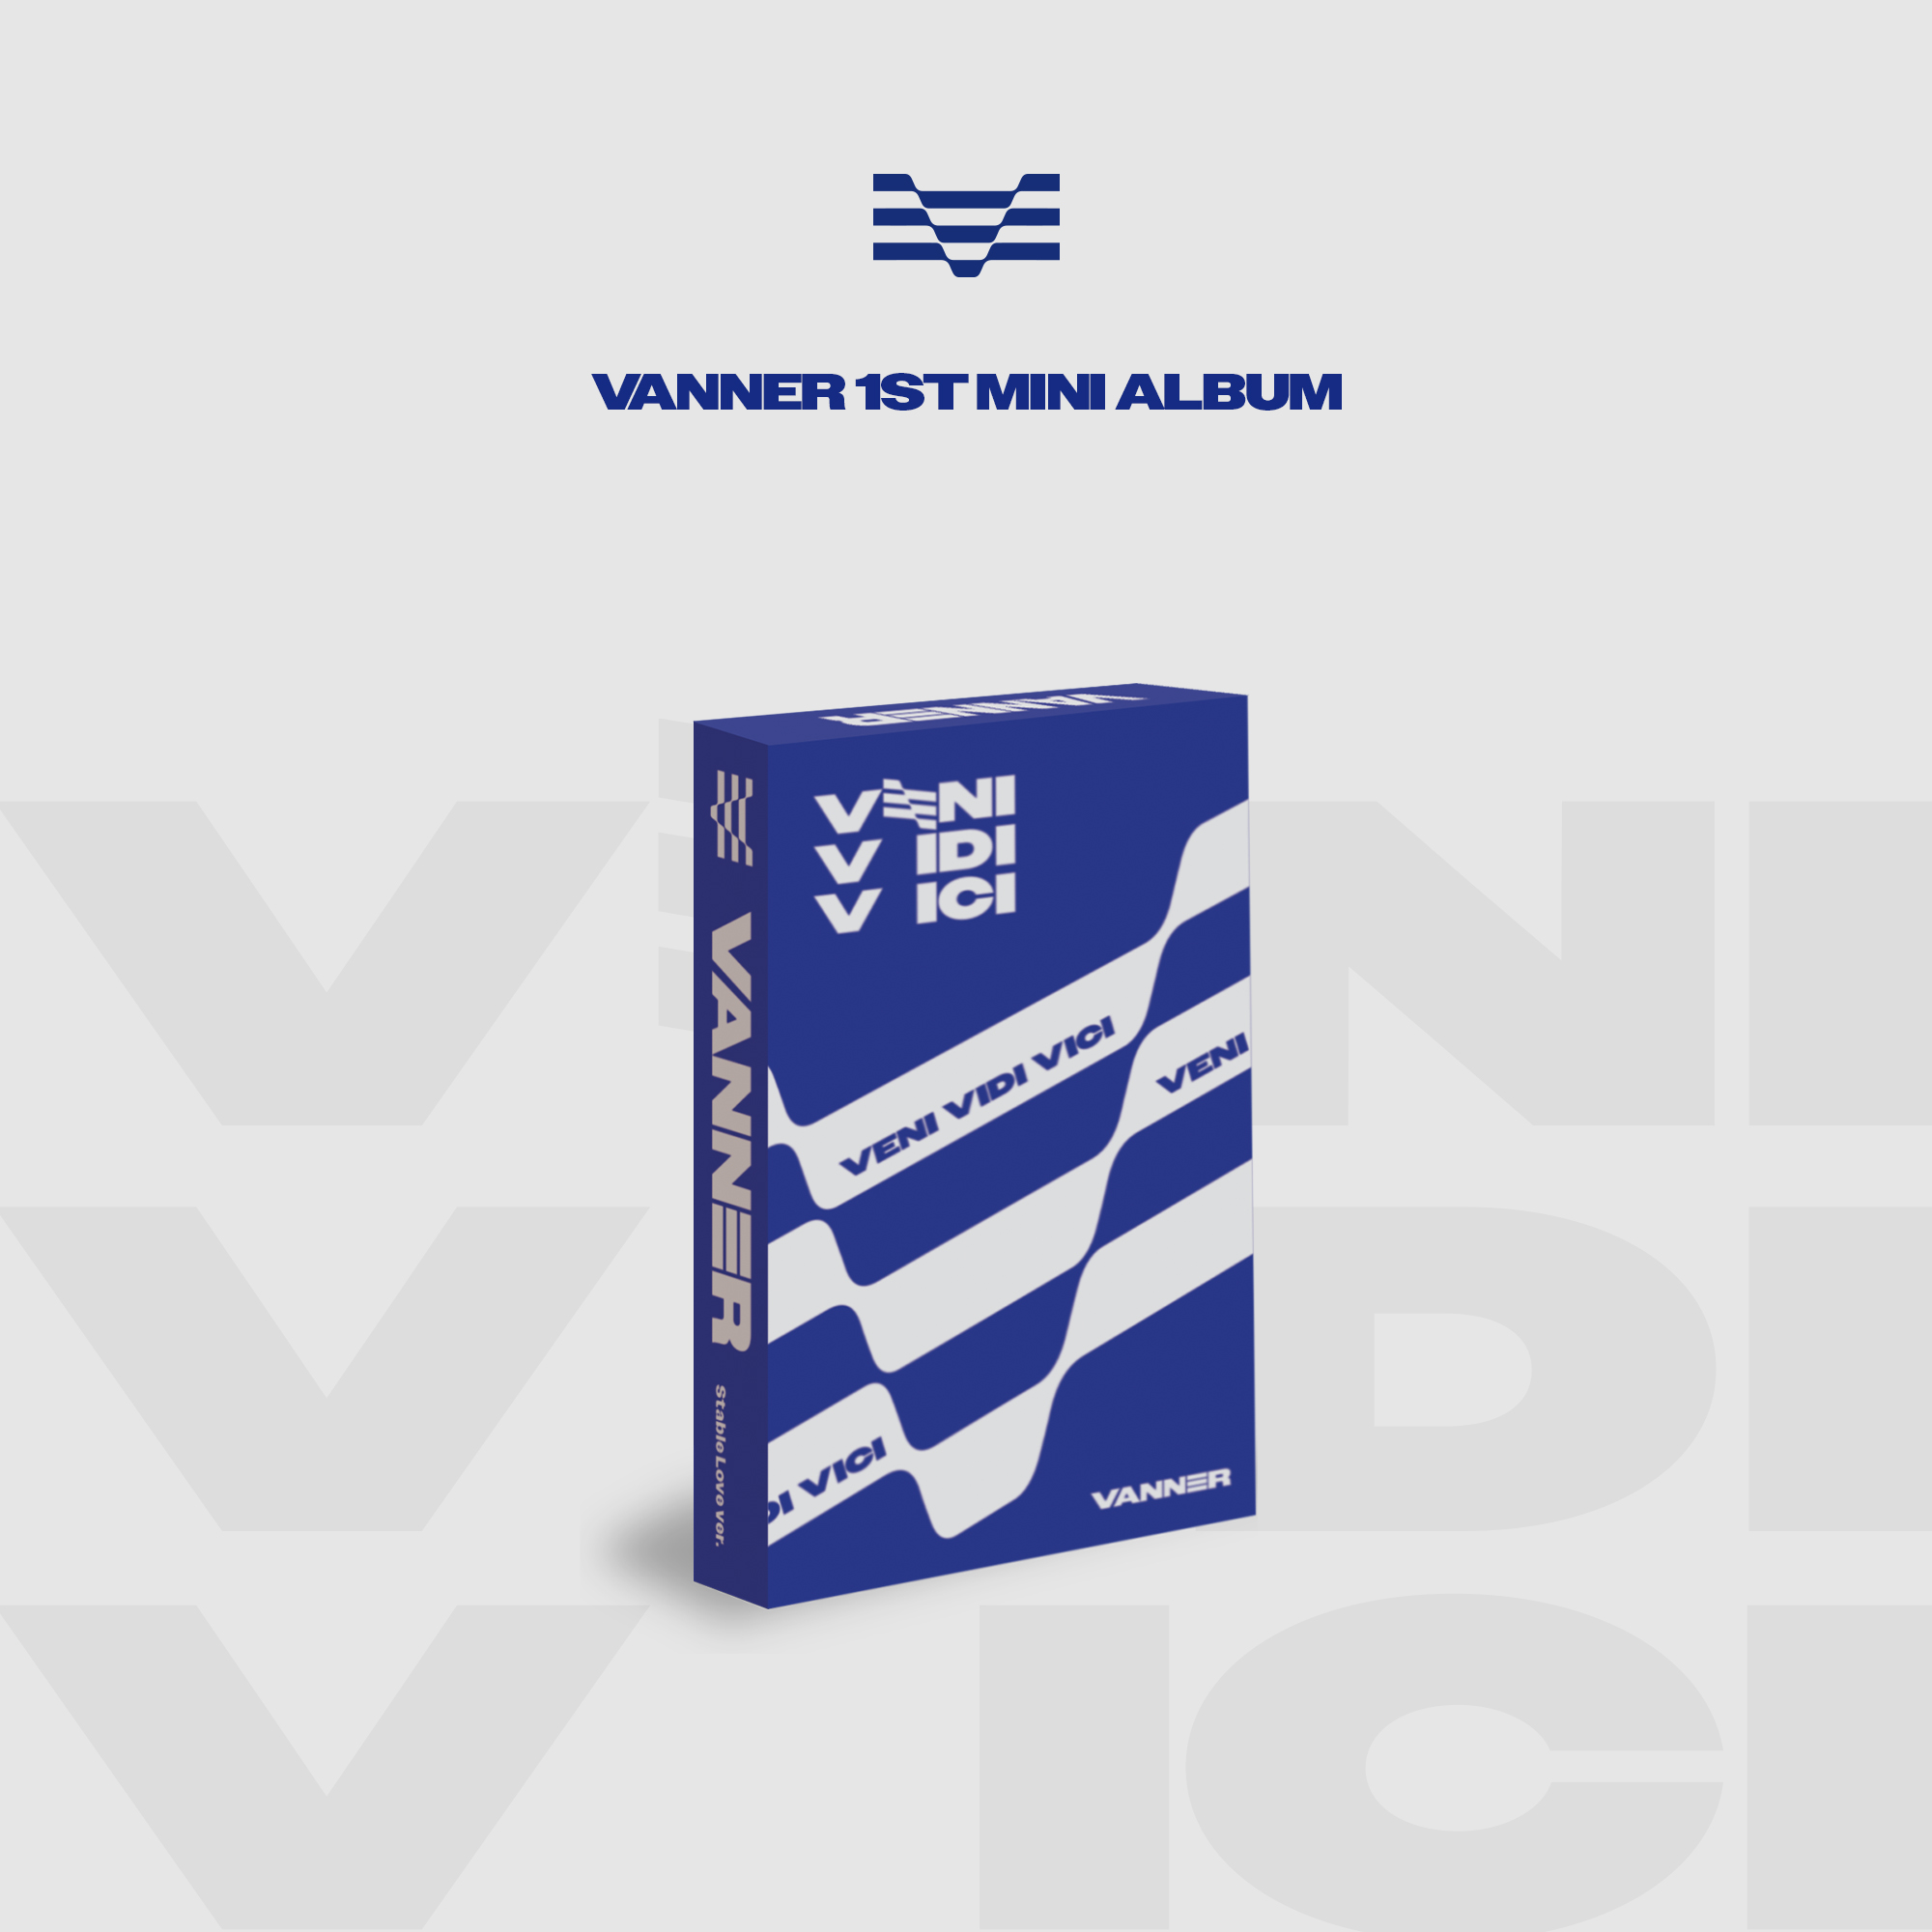 ktown4u.com : VANNER - Single Album Vol.1 [5cean: V] (Normal Edition)